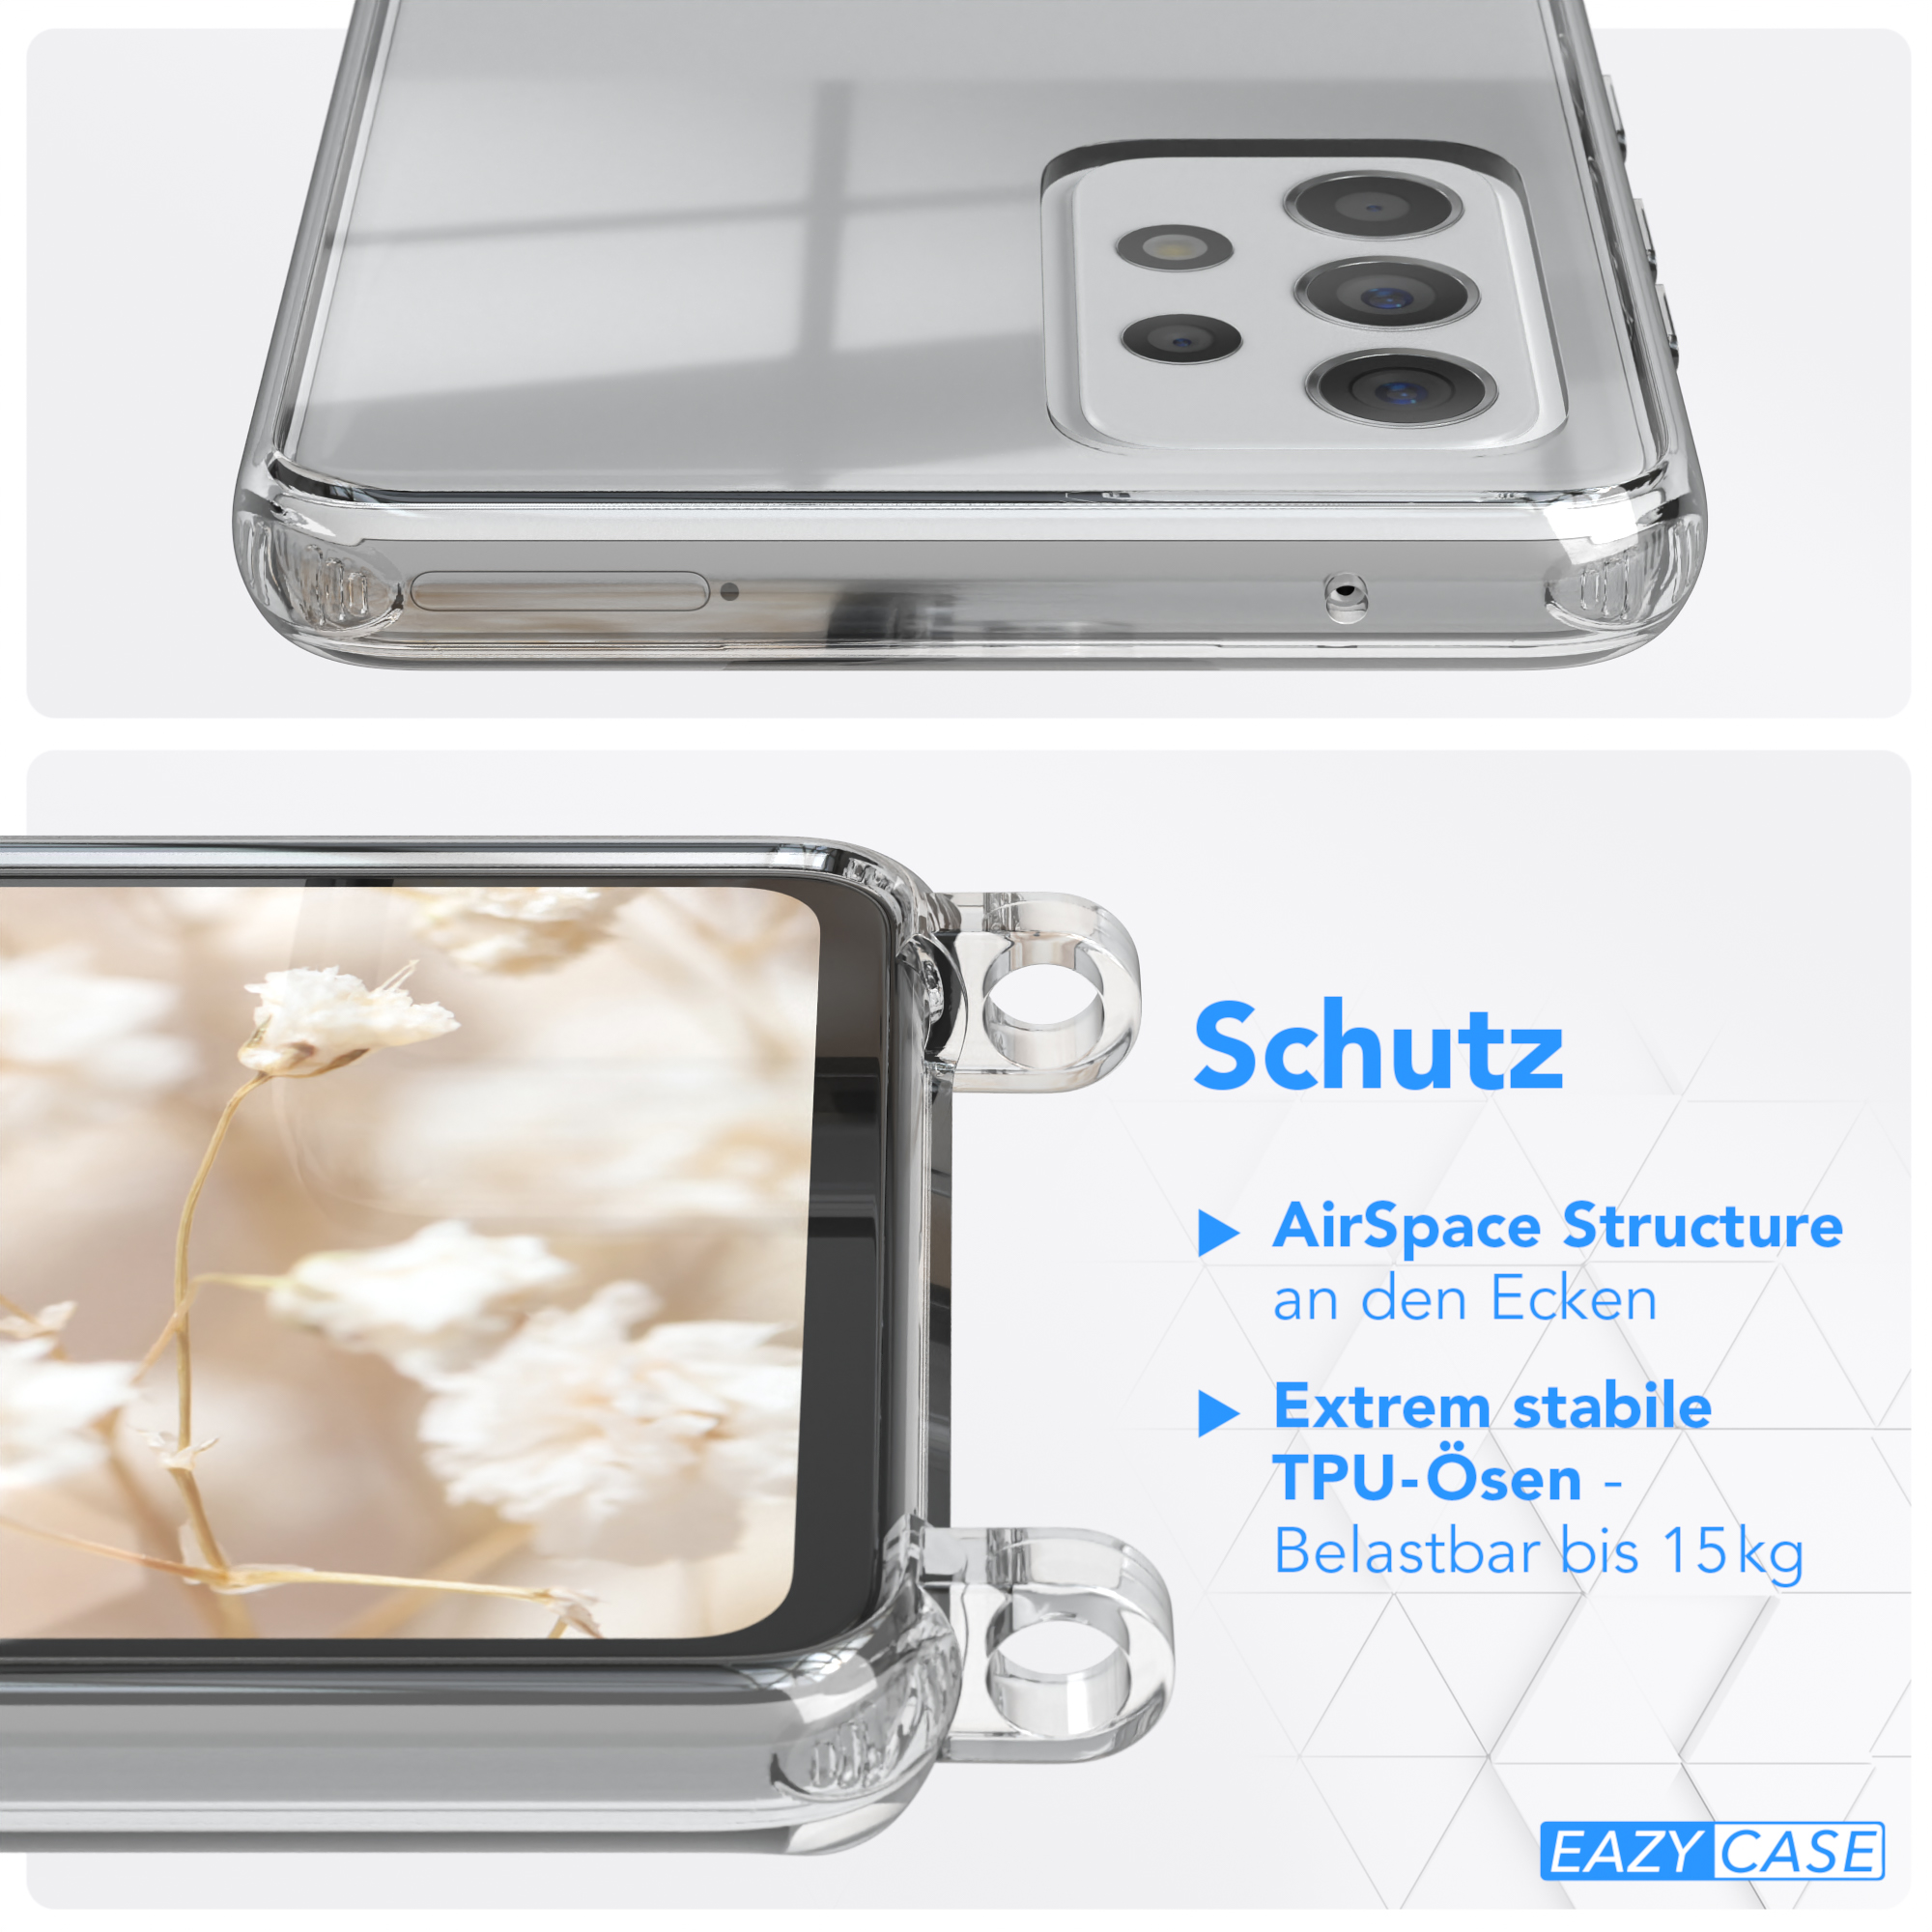 EAZY CASE Style, A52s Handyhülle Samsung, / Galaxy Umhängetasche, 5G A52 A52 Kordel / Transparente Schwarz 5G, Grau / Boho mit